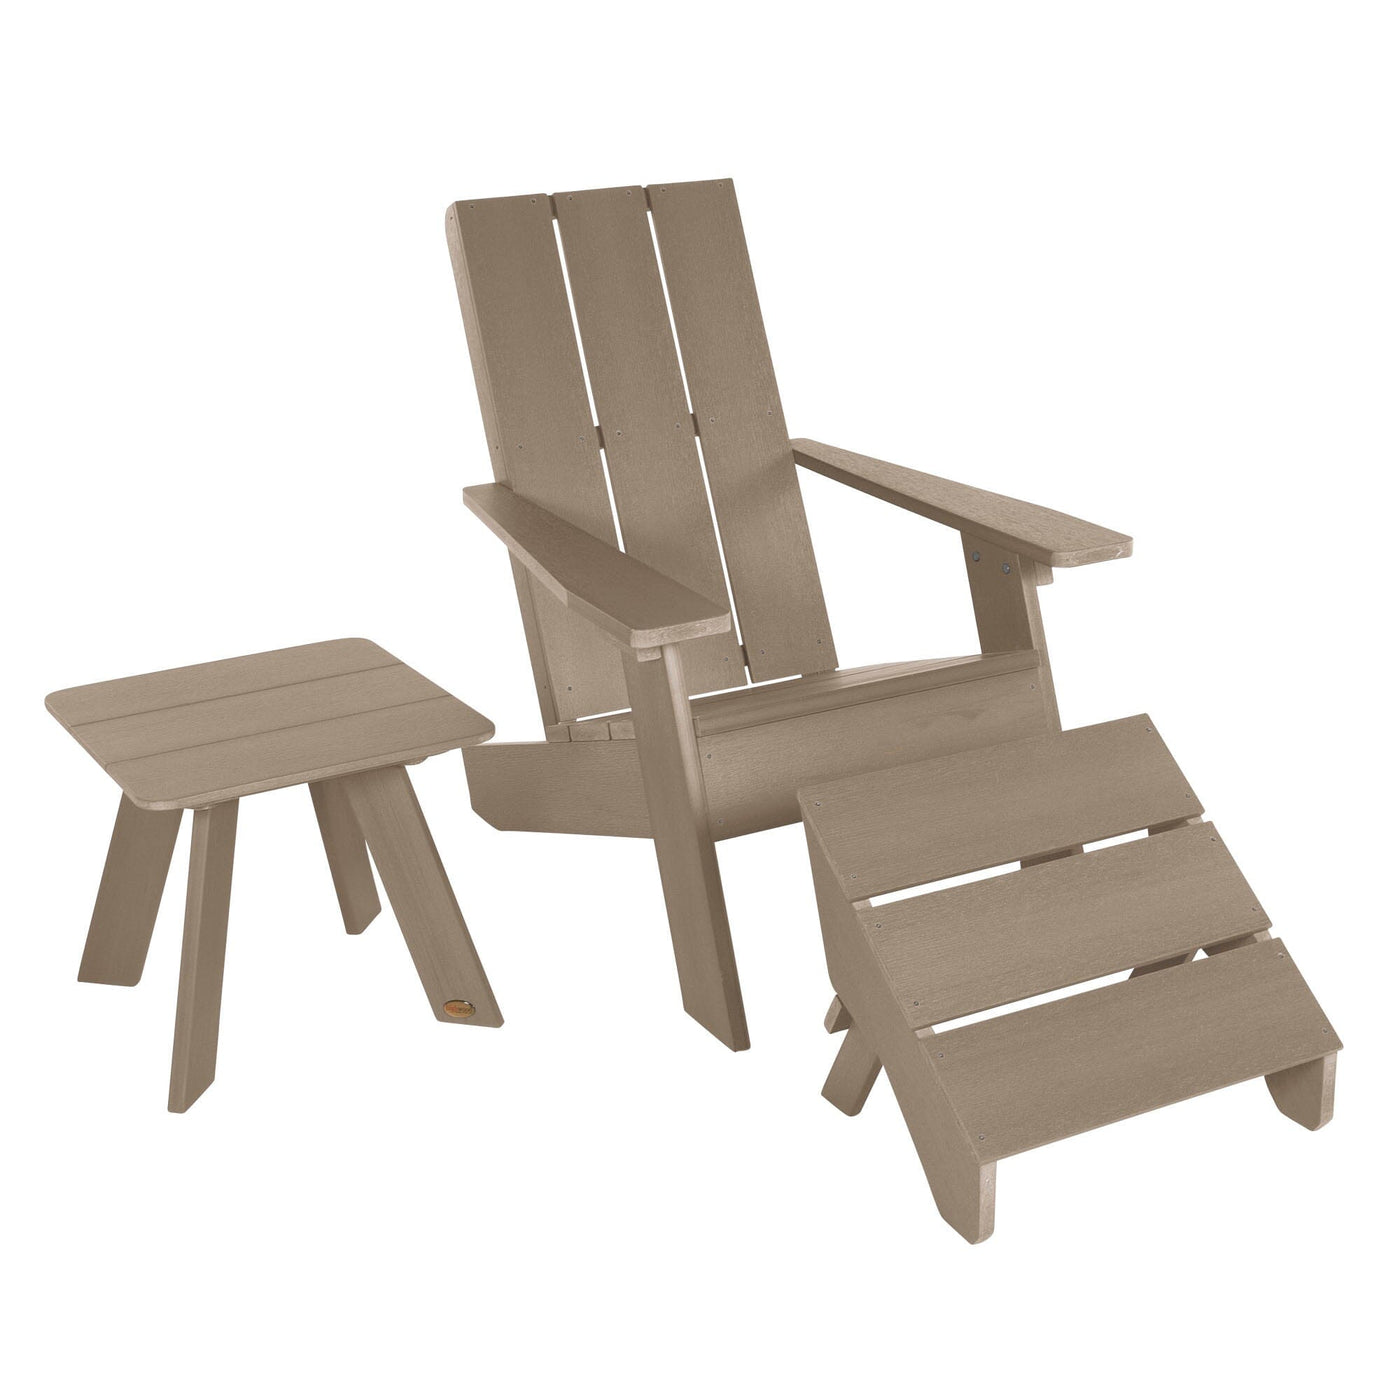 Italica Modern Adirondack Chair, Ottoman, and Side Table Adirondack Chairs Highwood USA Woodland Brown 